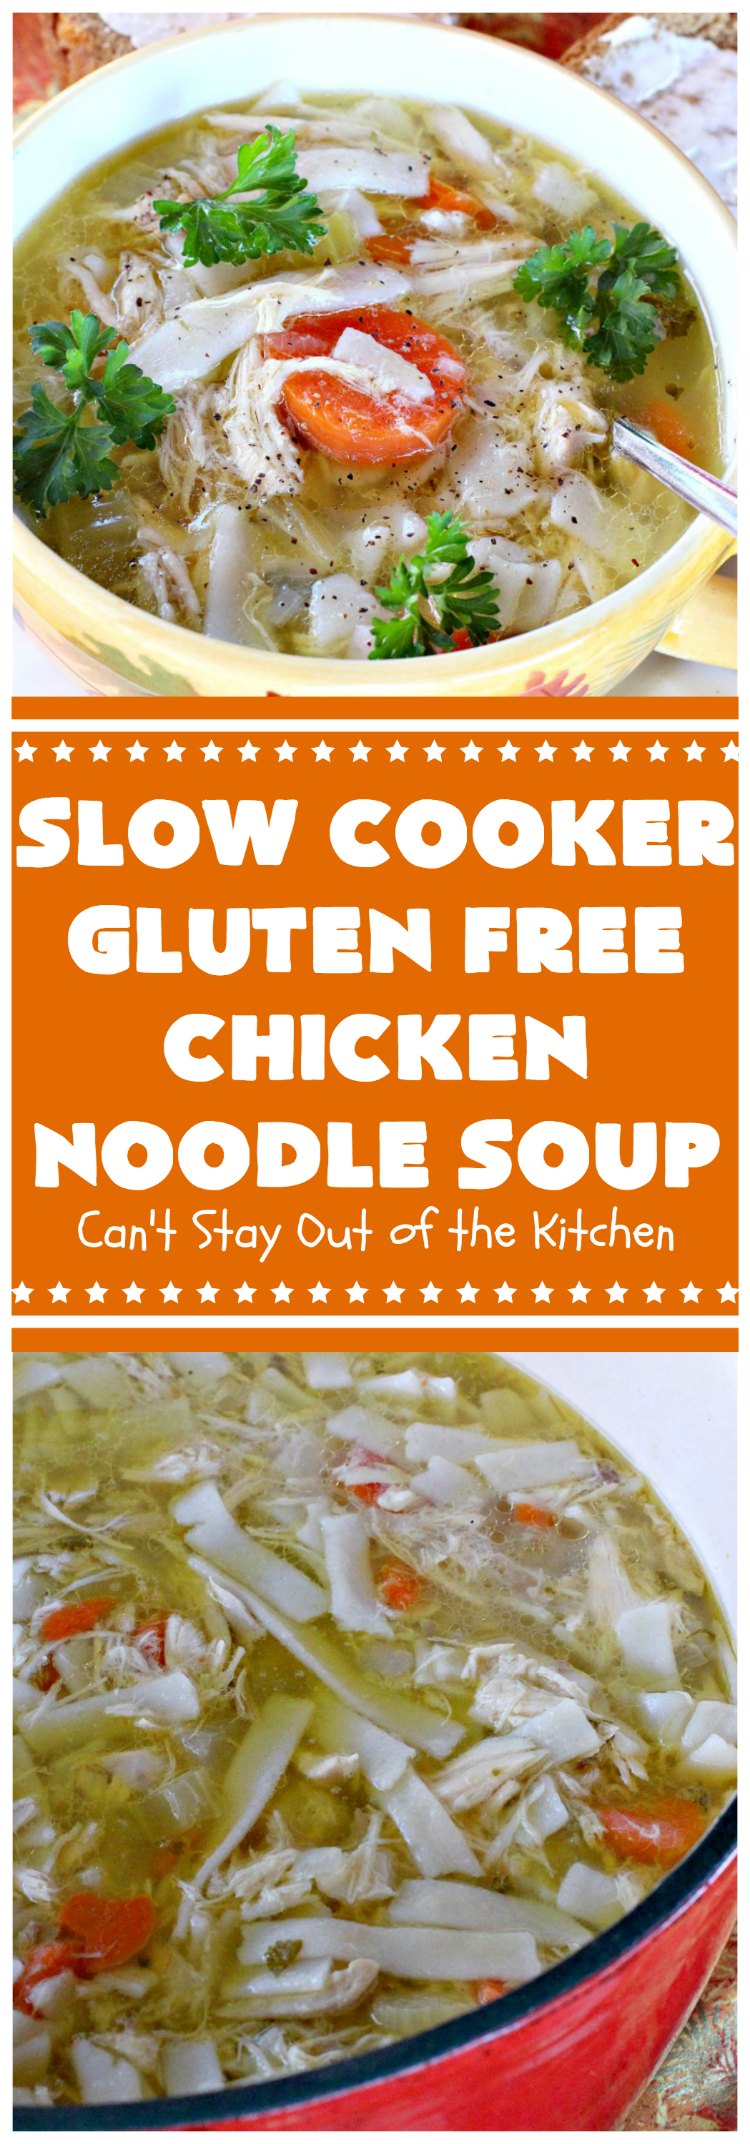 http://cantstayoutofthekitchen.com/wp-content/uploads/Slow-Cooker-Gluten-Free-Chicken-Noodle-Soup-Collage.jpg